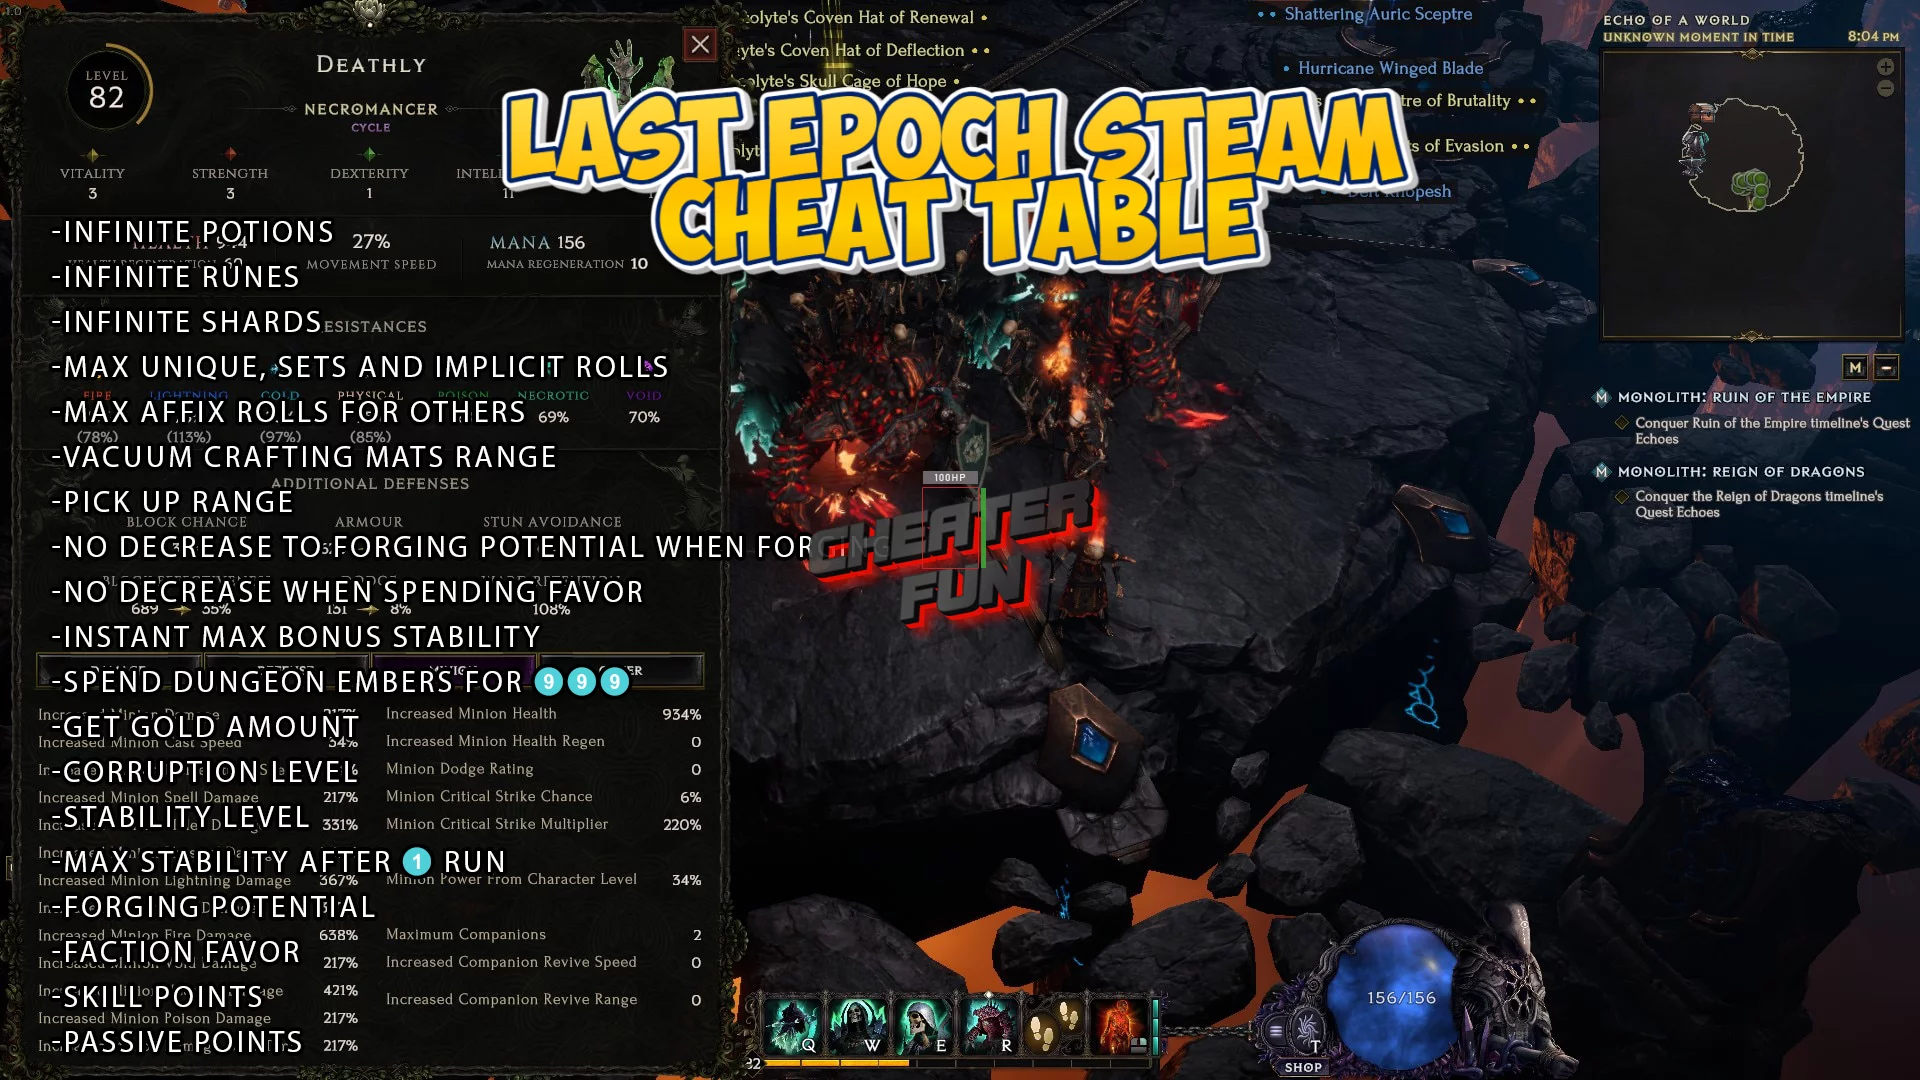 Last Epoch Steam Cheat Table